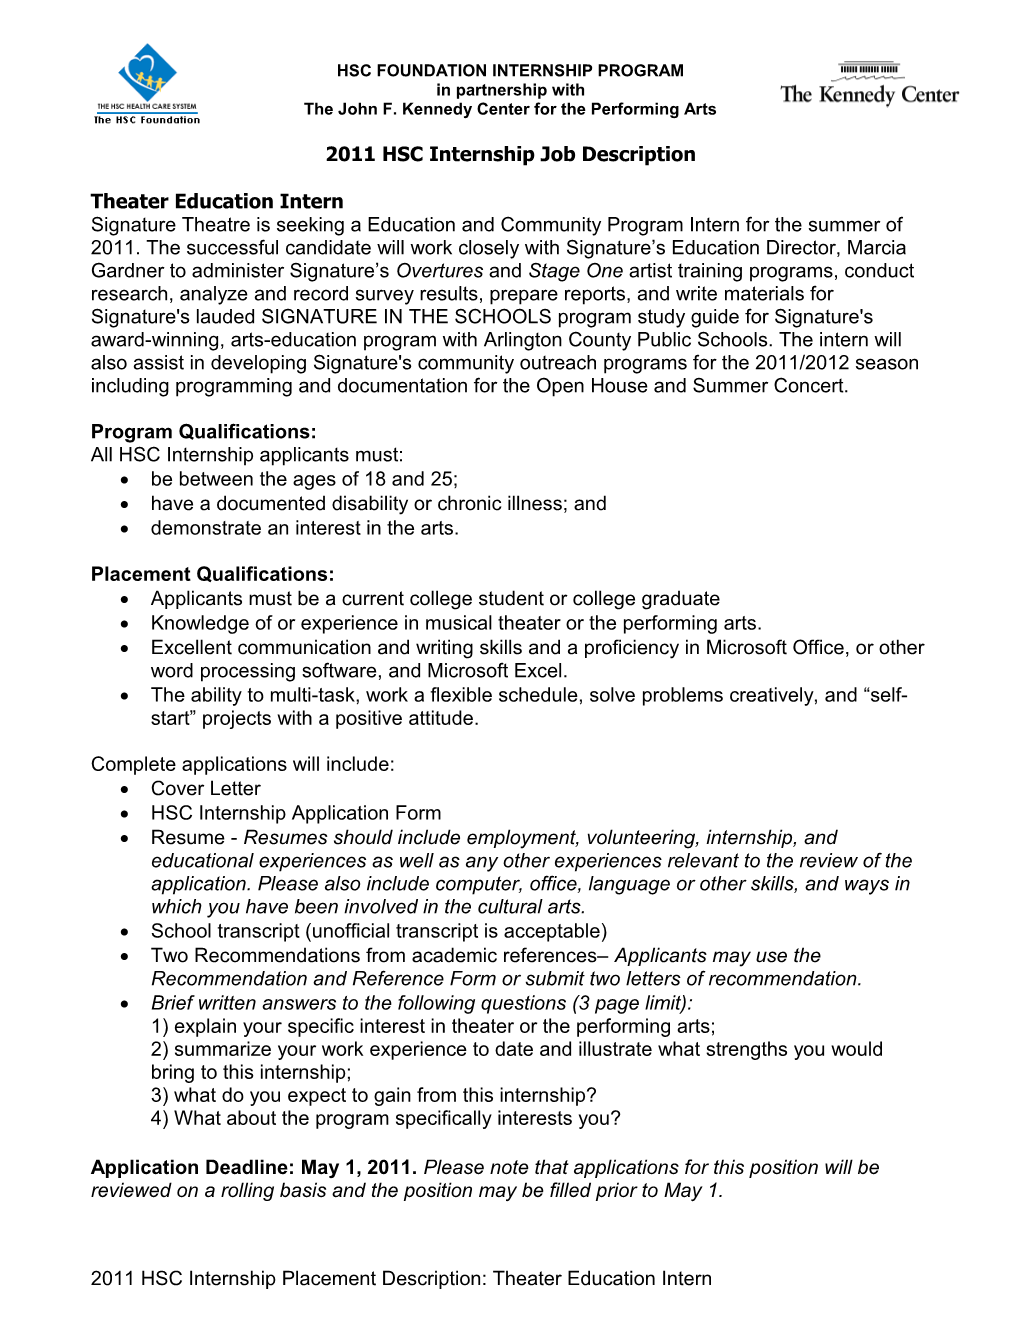 2010 HSC Internship Job Description